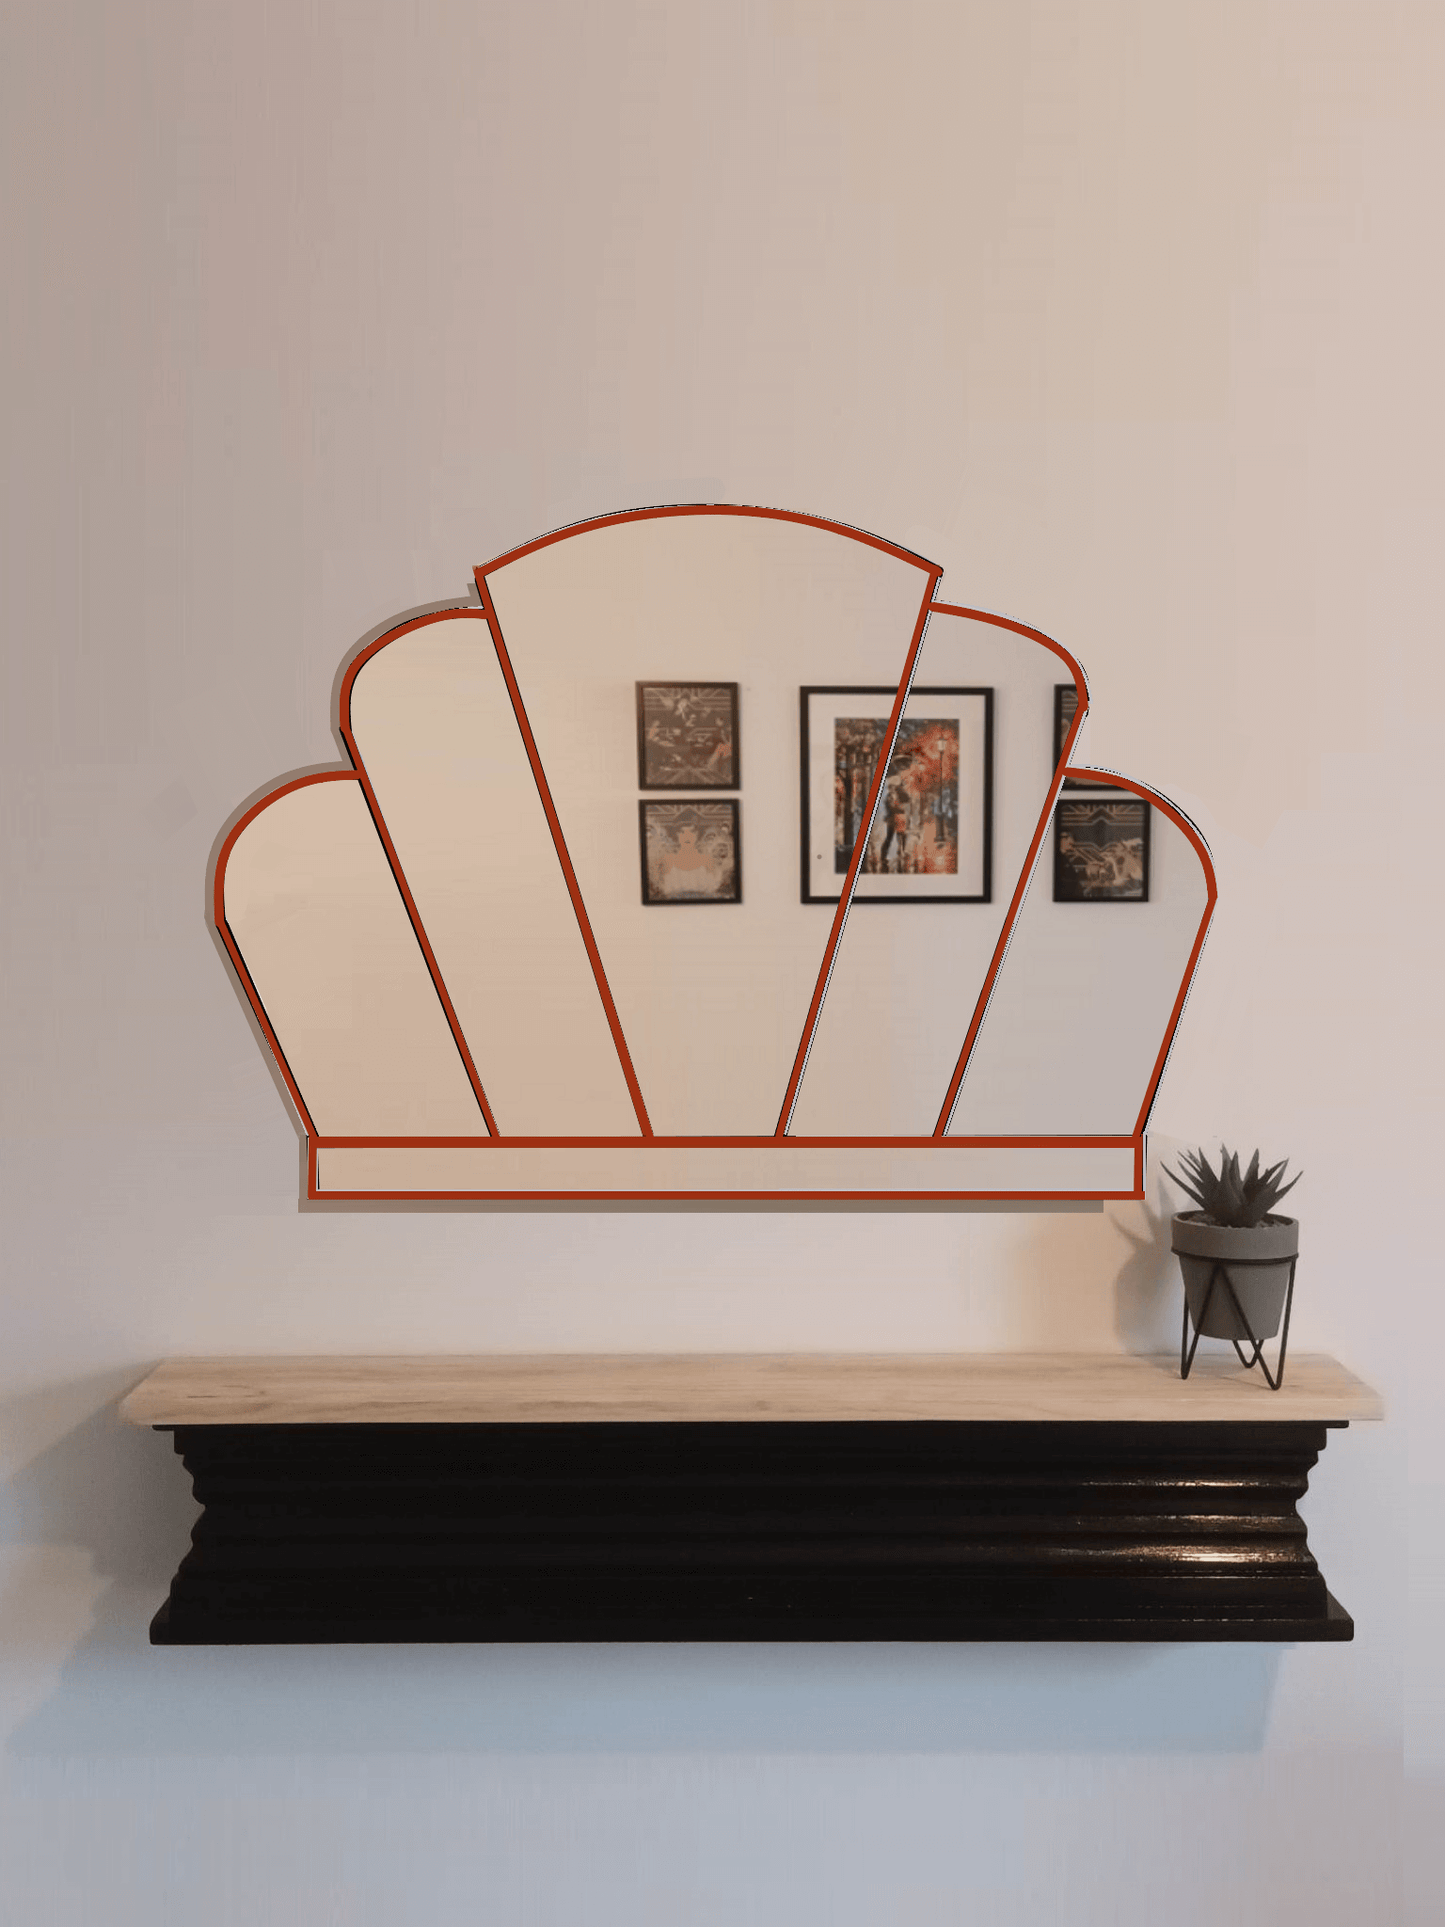 Art Deco Wall Mirror